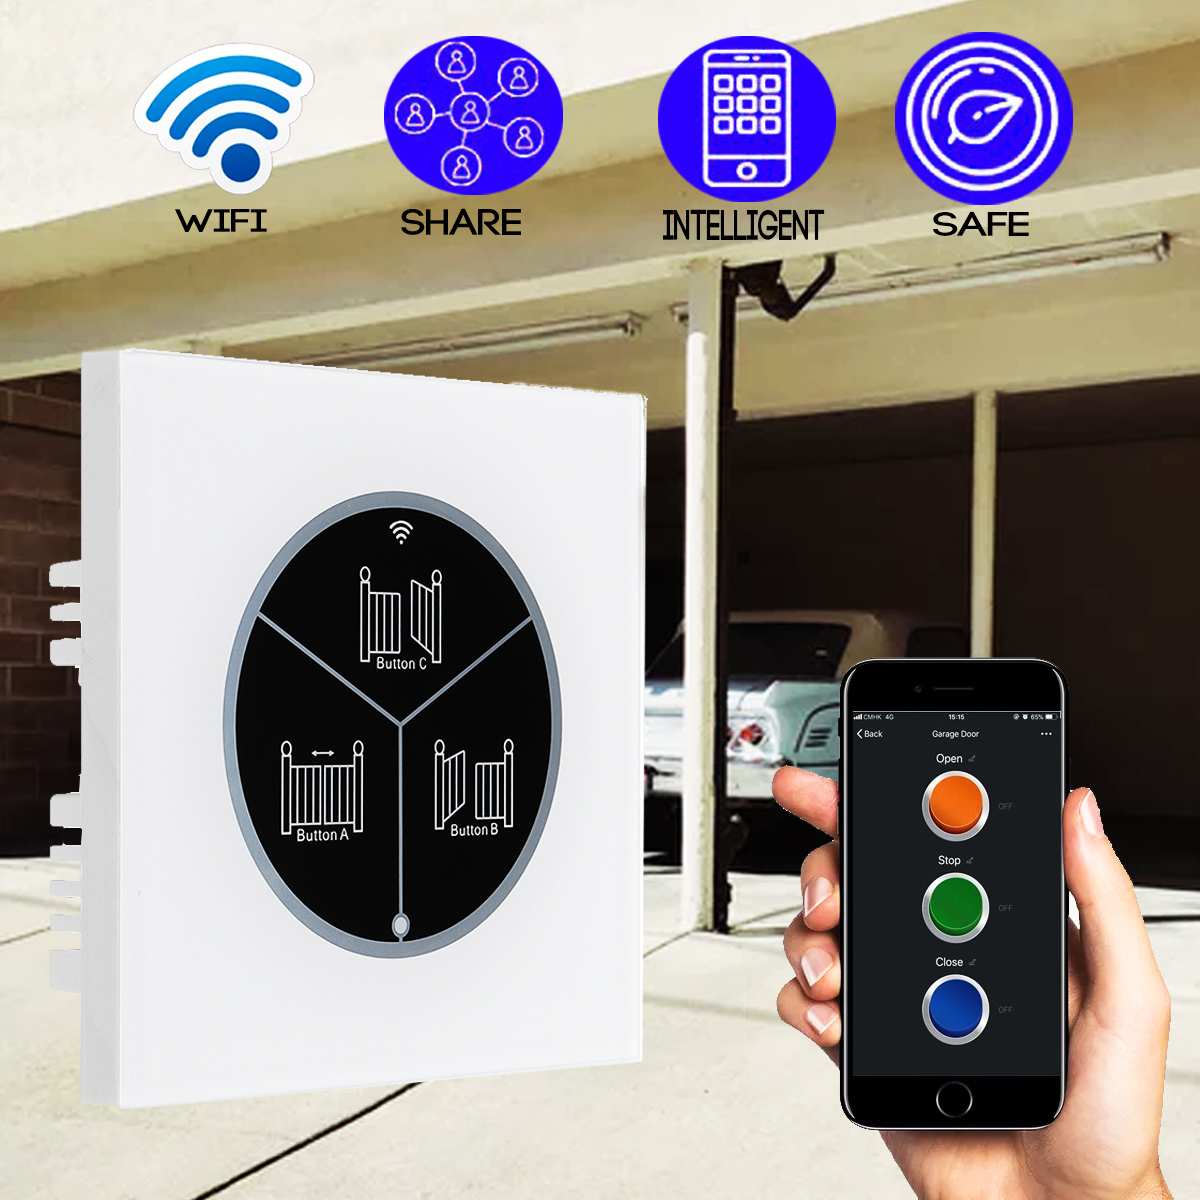 Wireless Garage Door Opener Remote Control WiFi Switch Smart WiFi Remote Control for Automatic Door Gate Universal